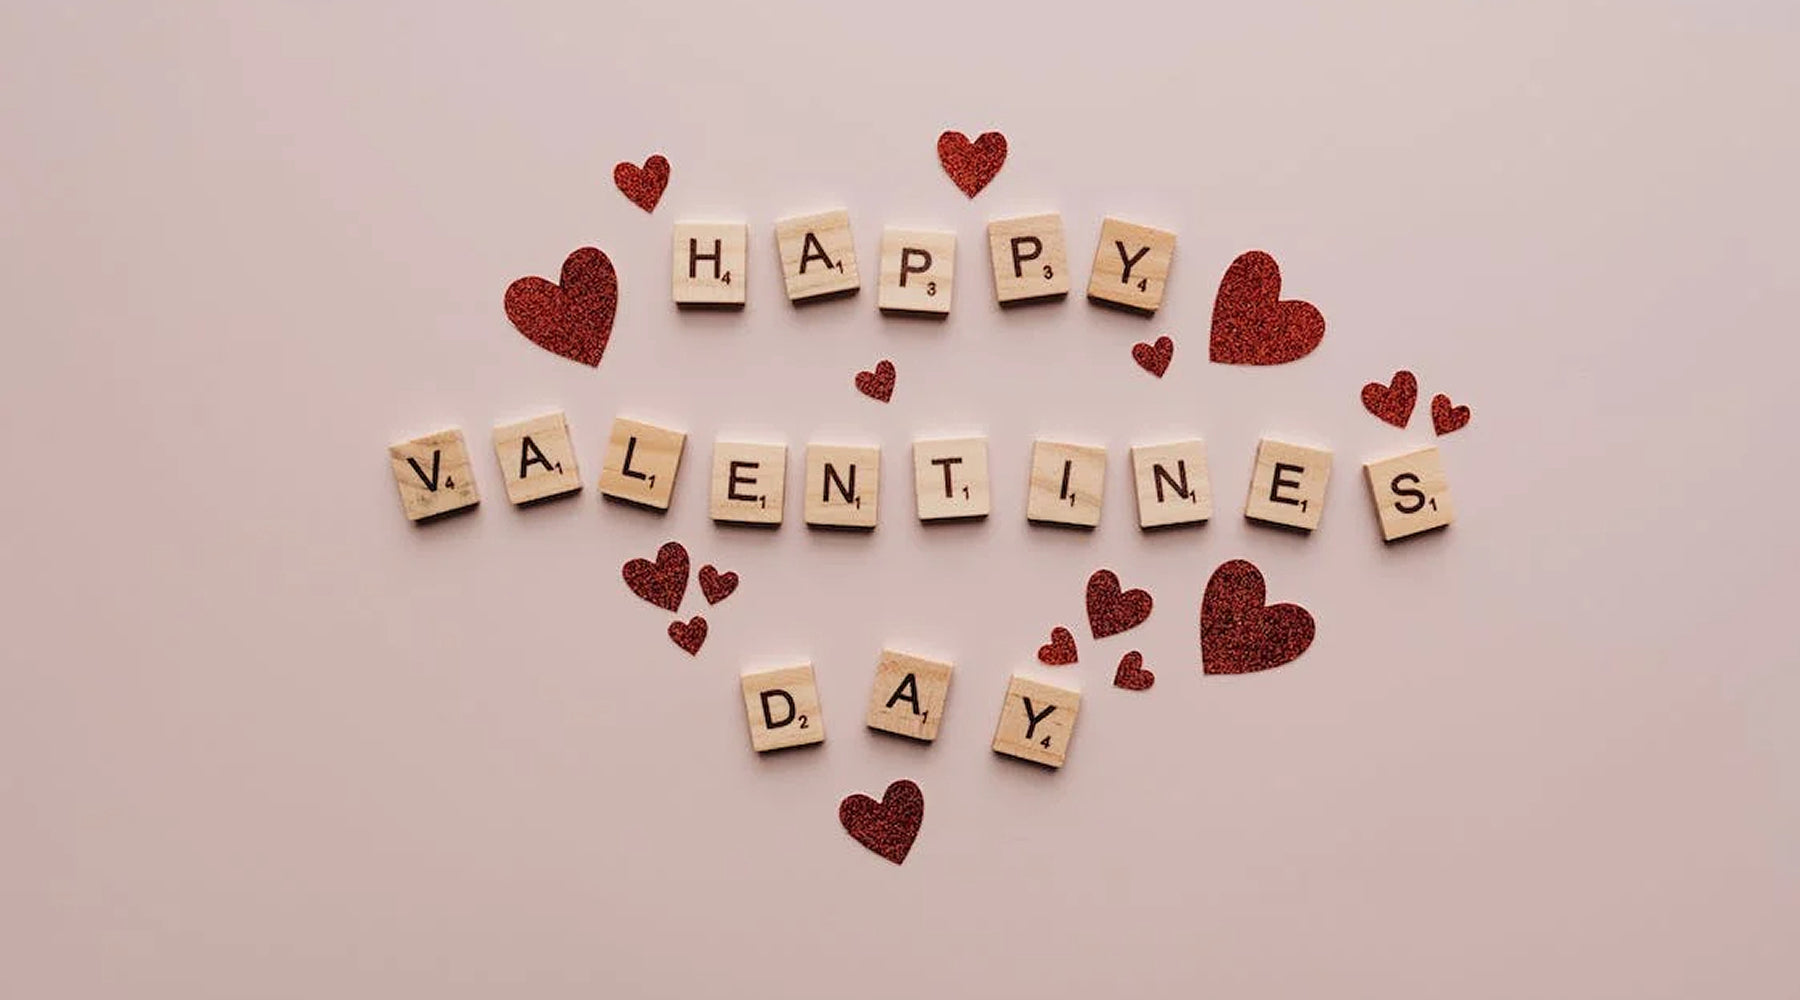 Valentines Day Specials: 15% Off Candies, Chocolates, Baked Goods & Bundles